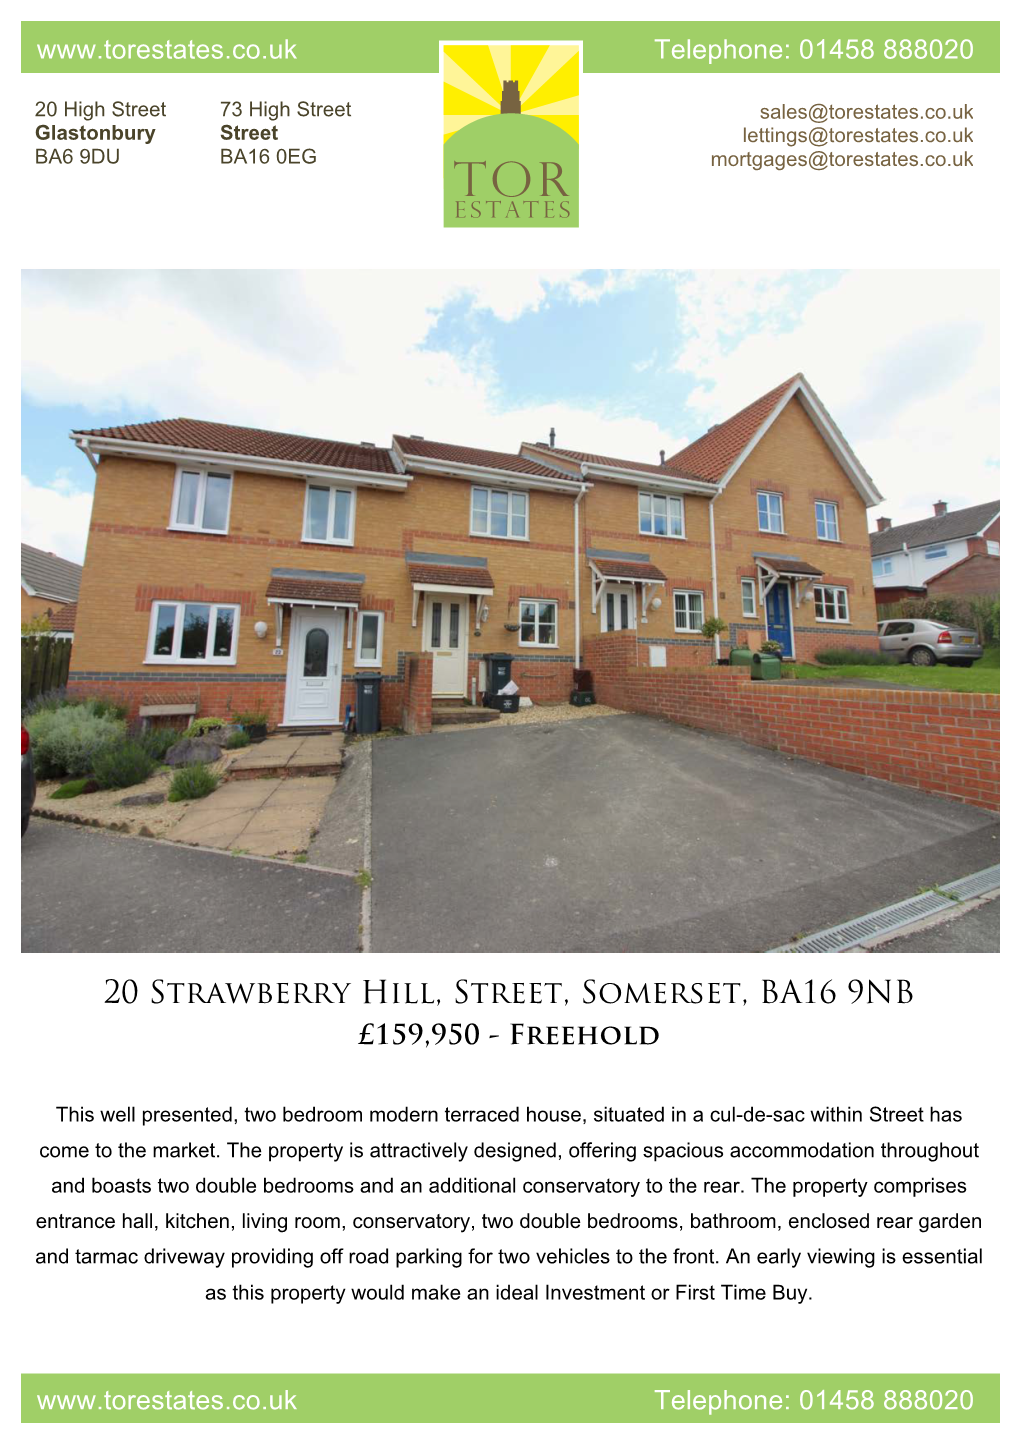 20 Strawberry Hill, Street, Somerset, BA16 9NB